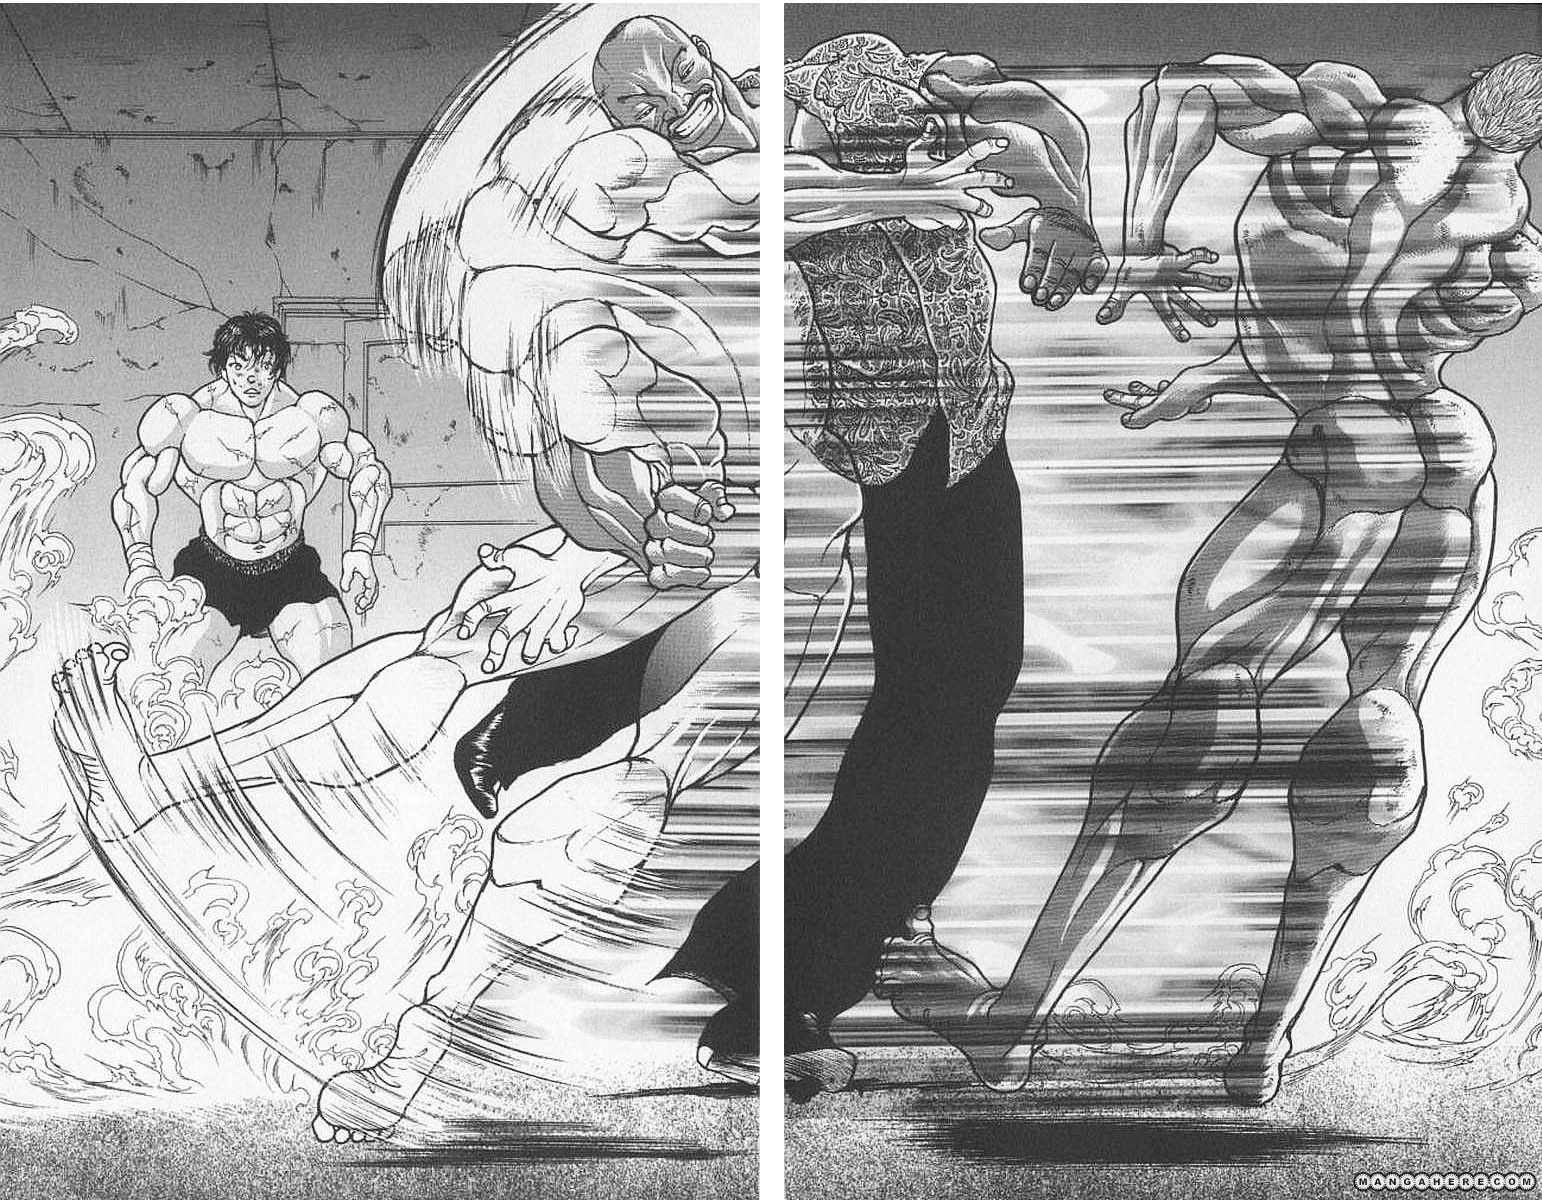 Gouki Shibukawa Archives - Page 45 of 59 - Baki Manga Online